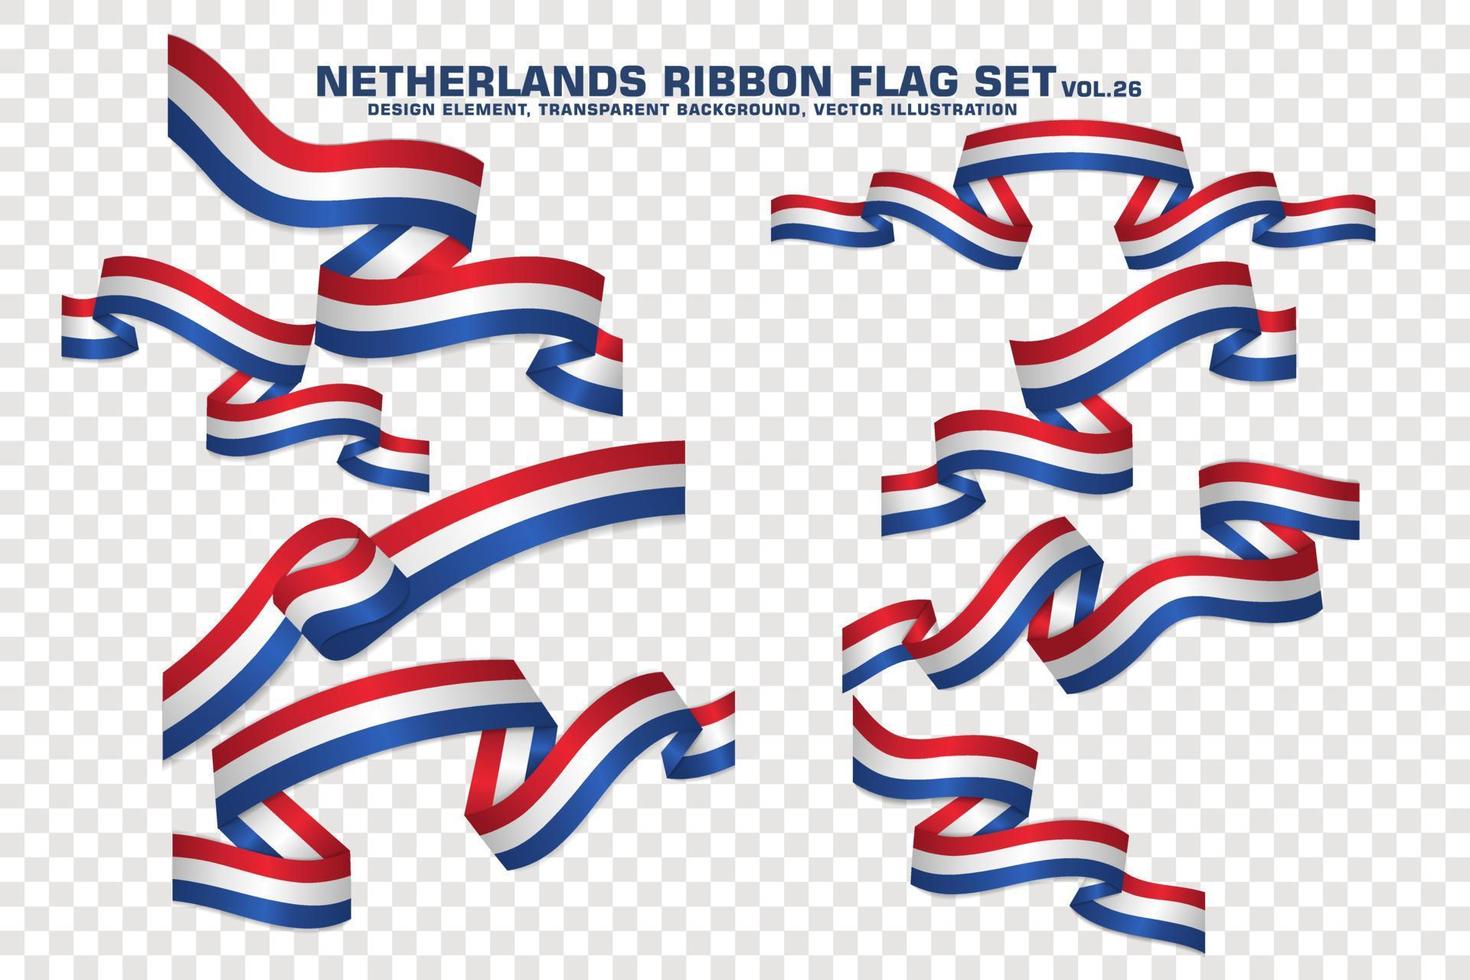 nederländerna bandflaggor set, elementdesign, 3d-stil. vektor illustration